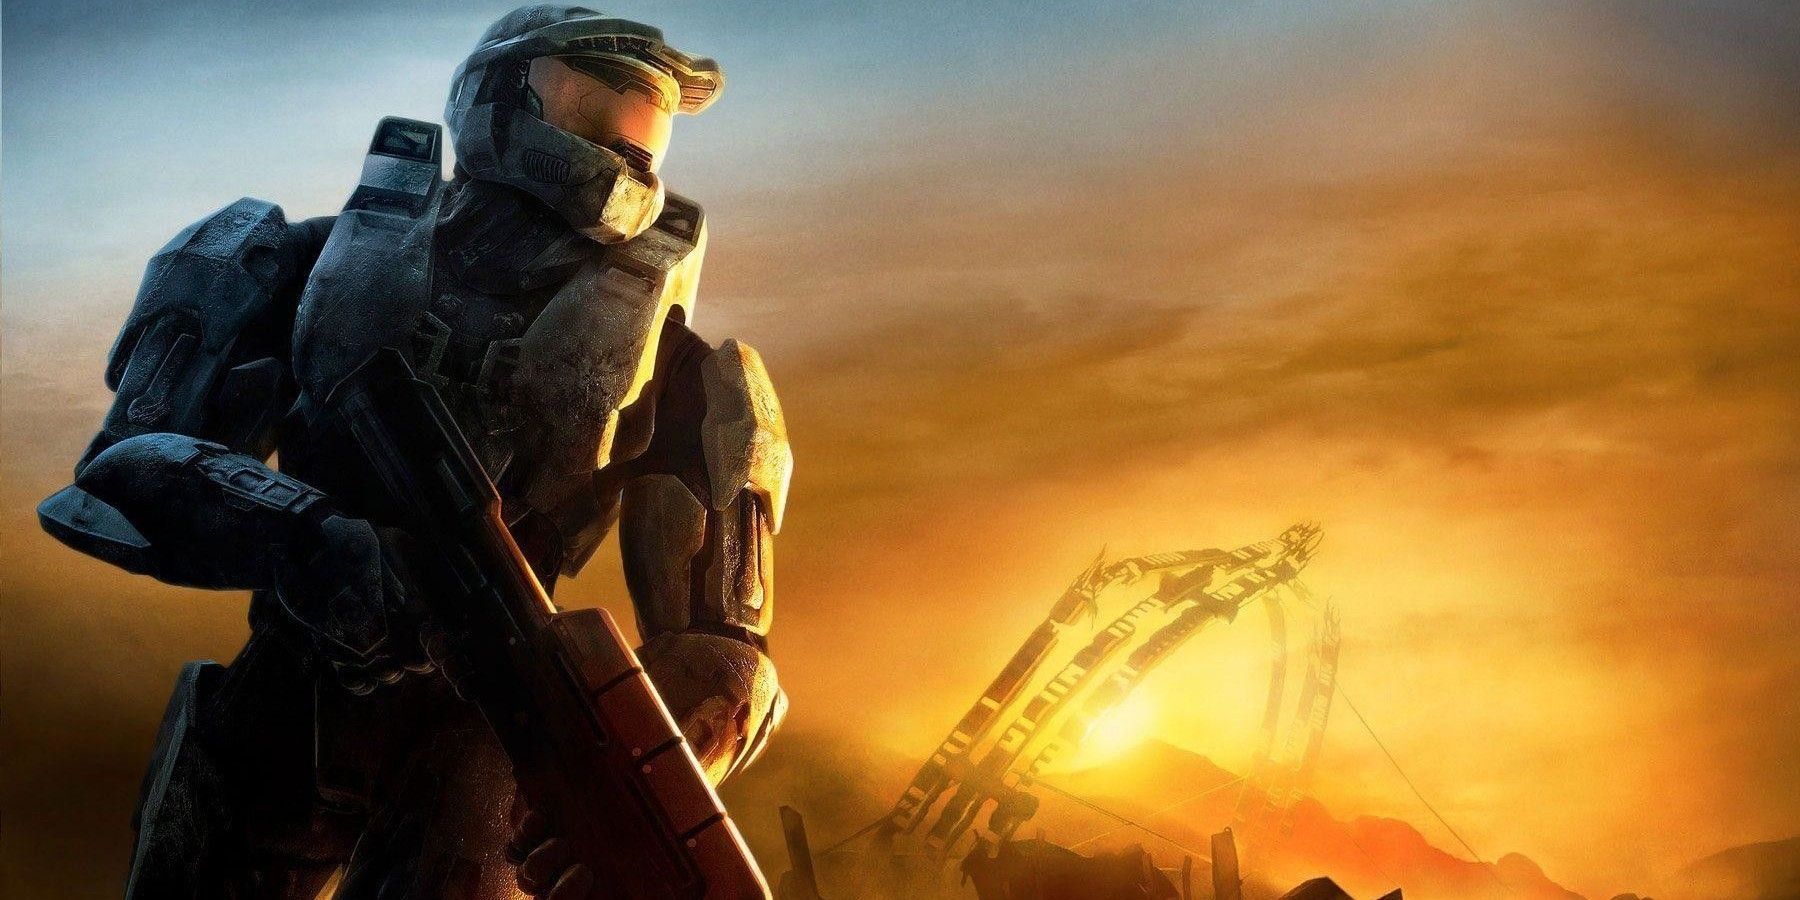 Halo 3 Cover art